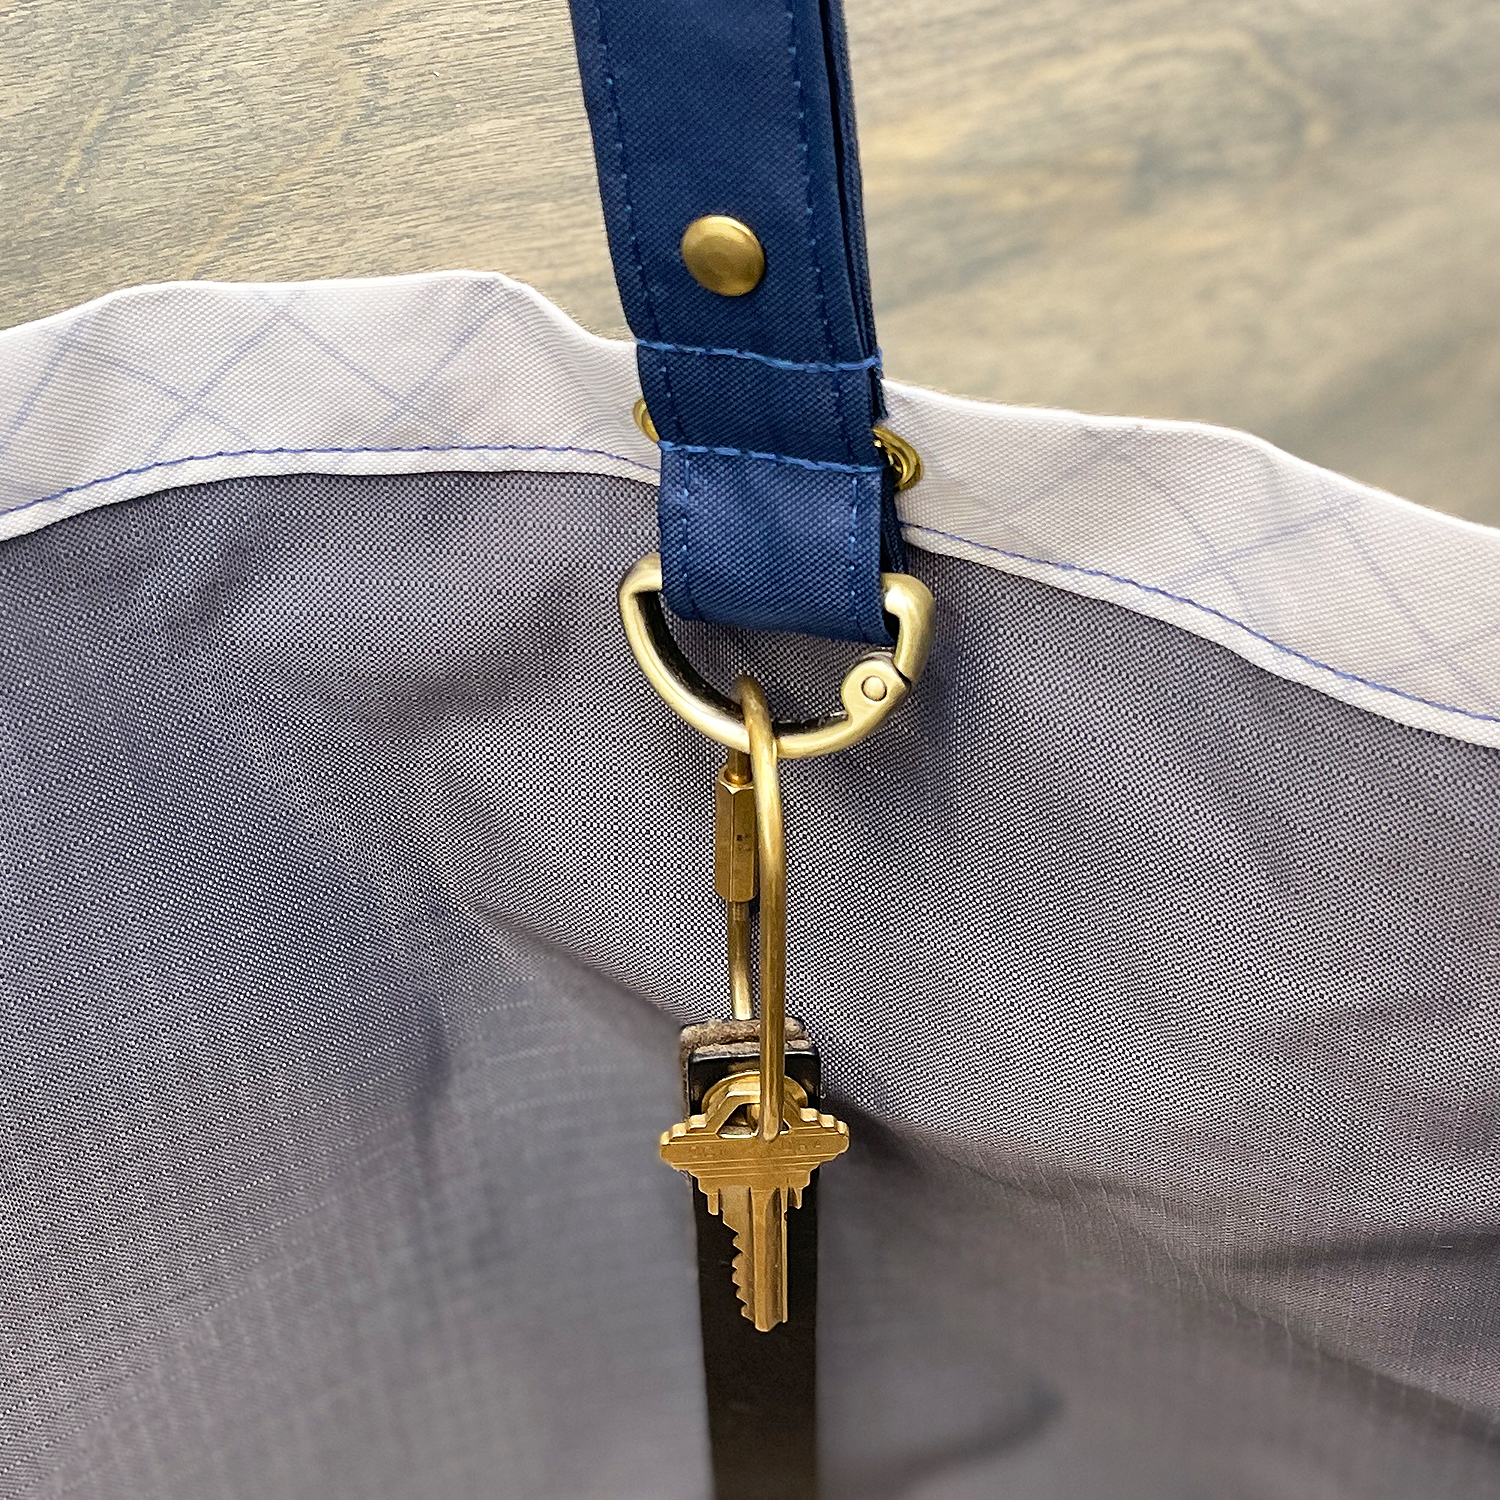 Original Maine x Flowfold White 20L Tote Bag with interior zipper pocket